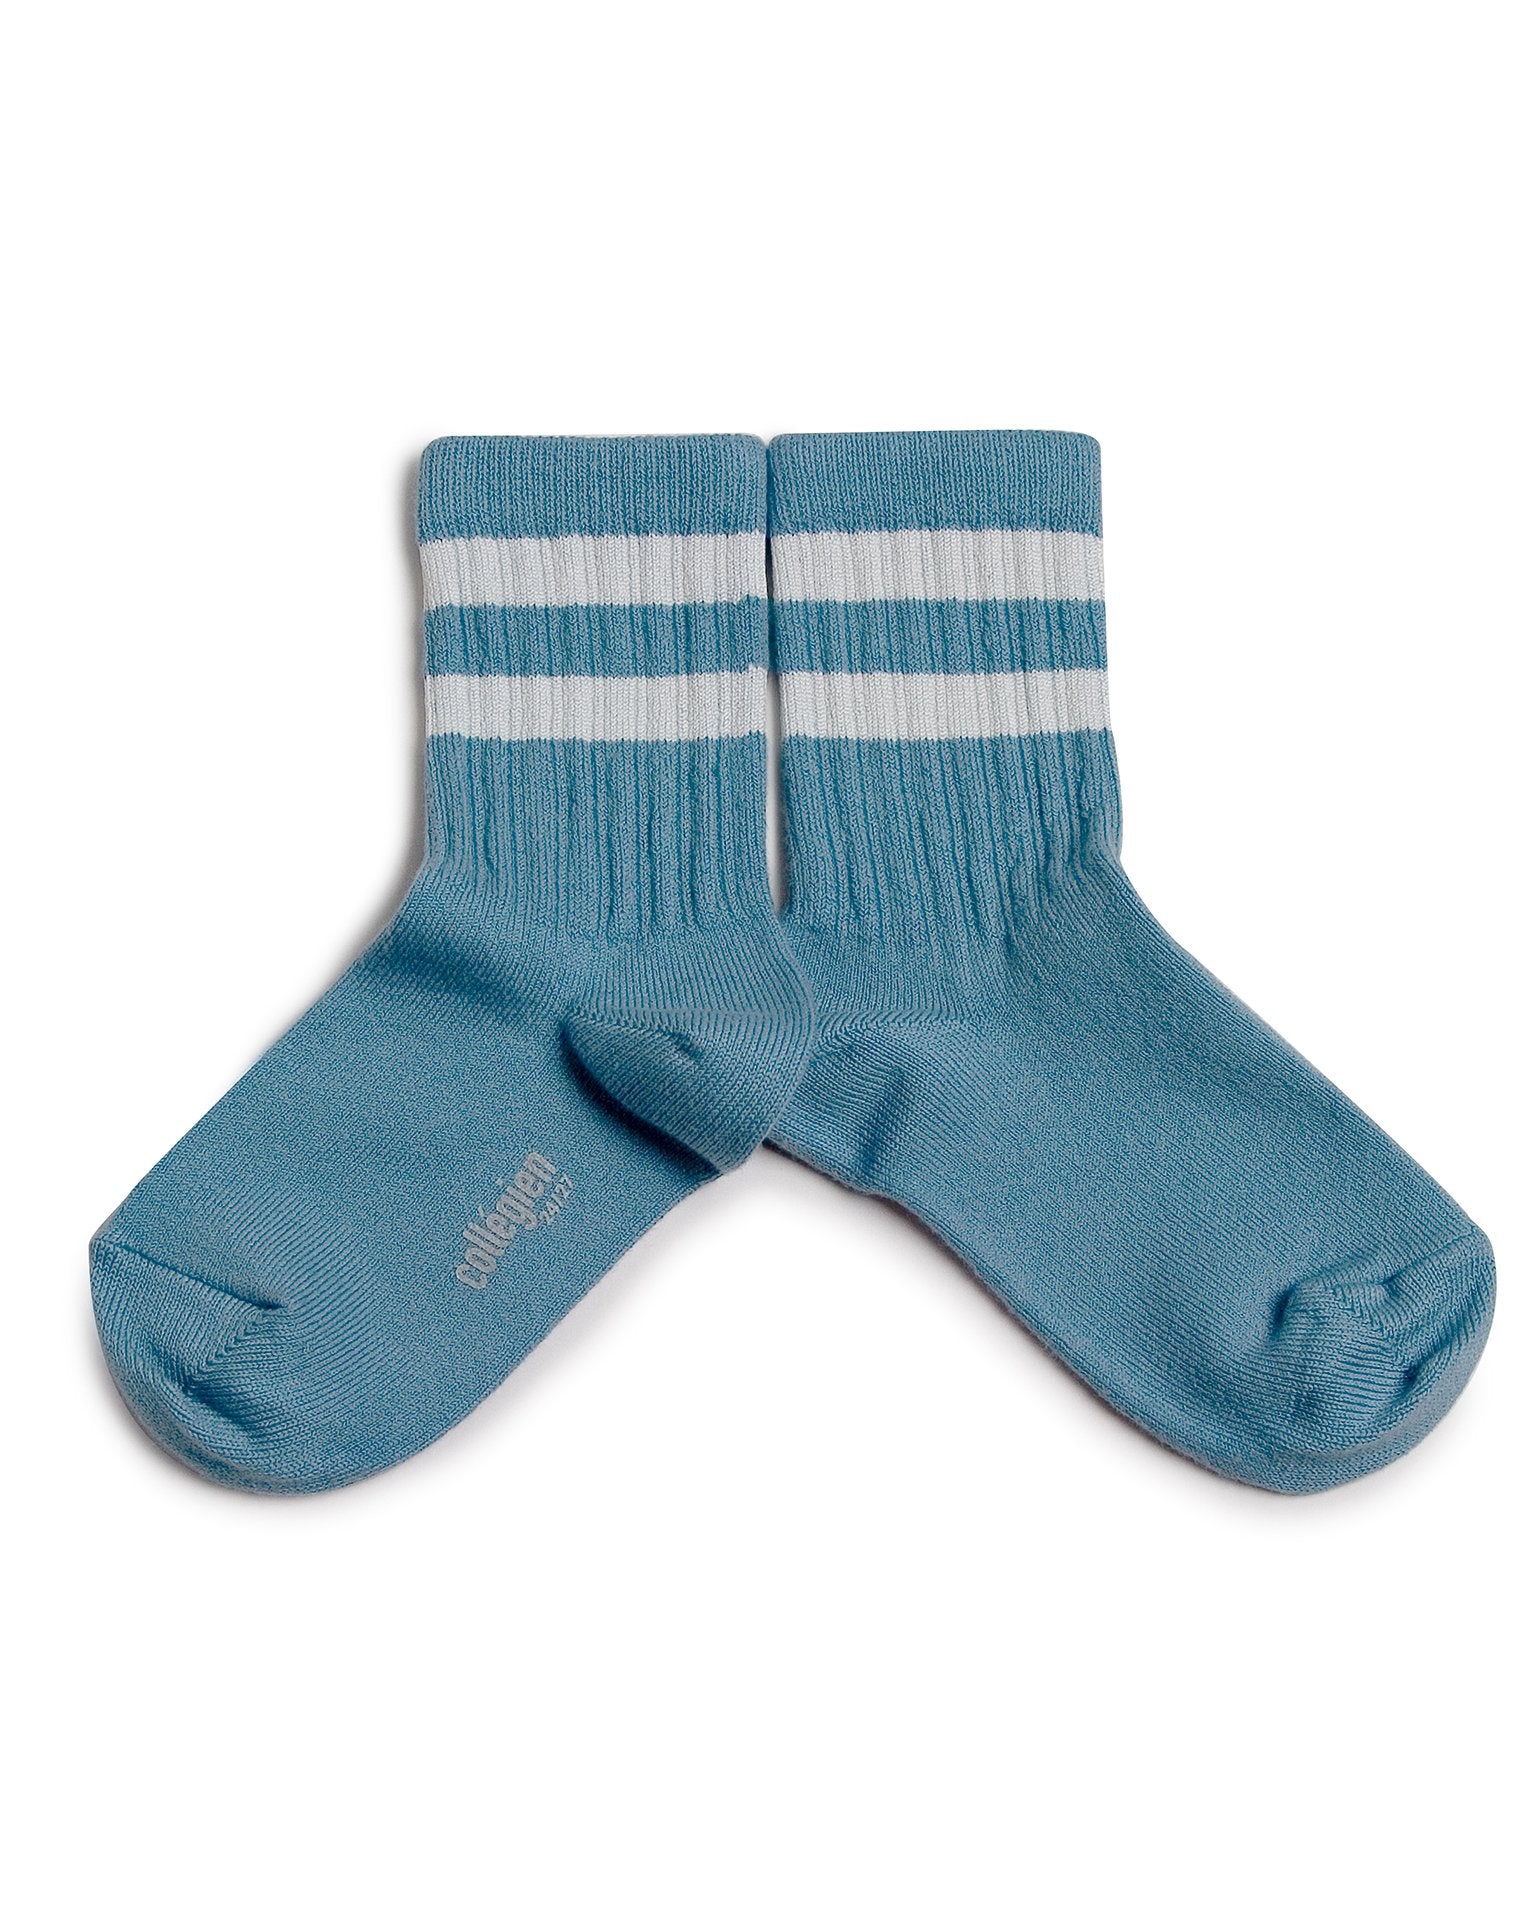 Little collegien accessories ribbed varsity socks in bleu azur